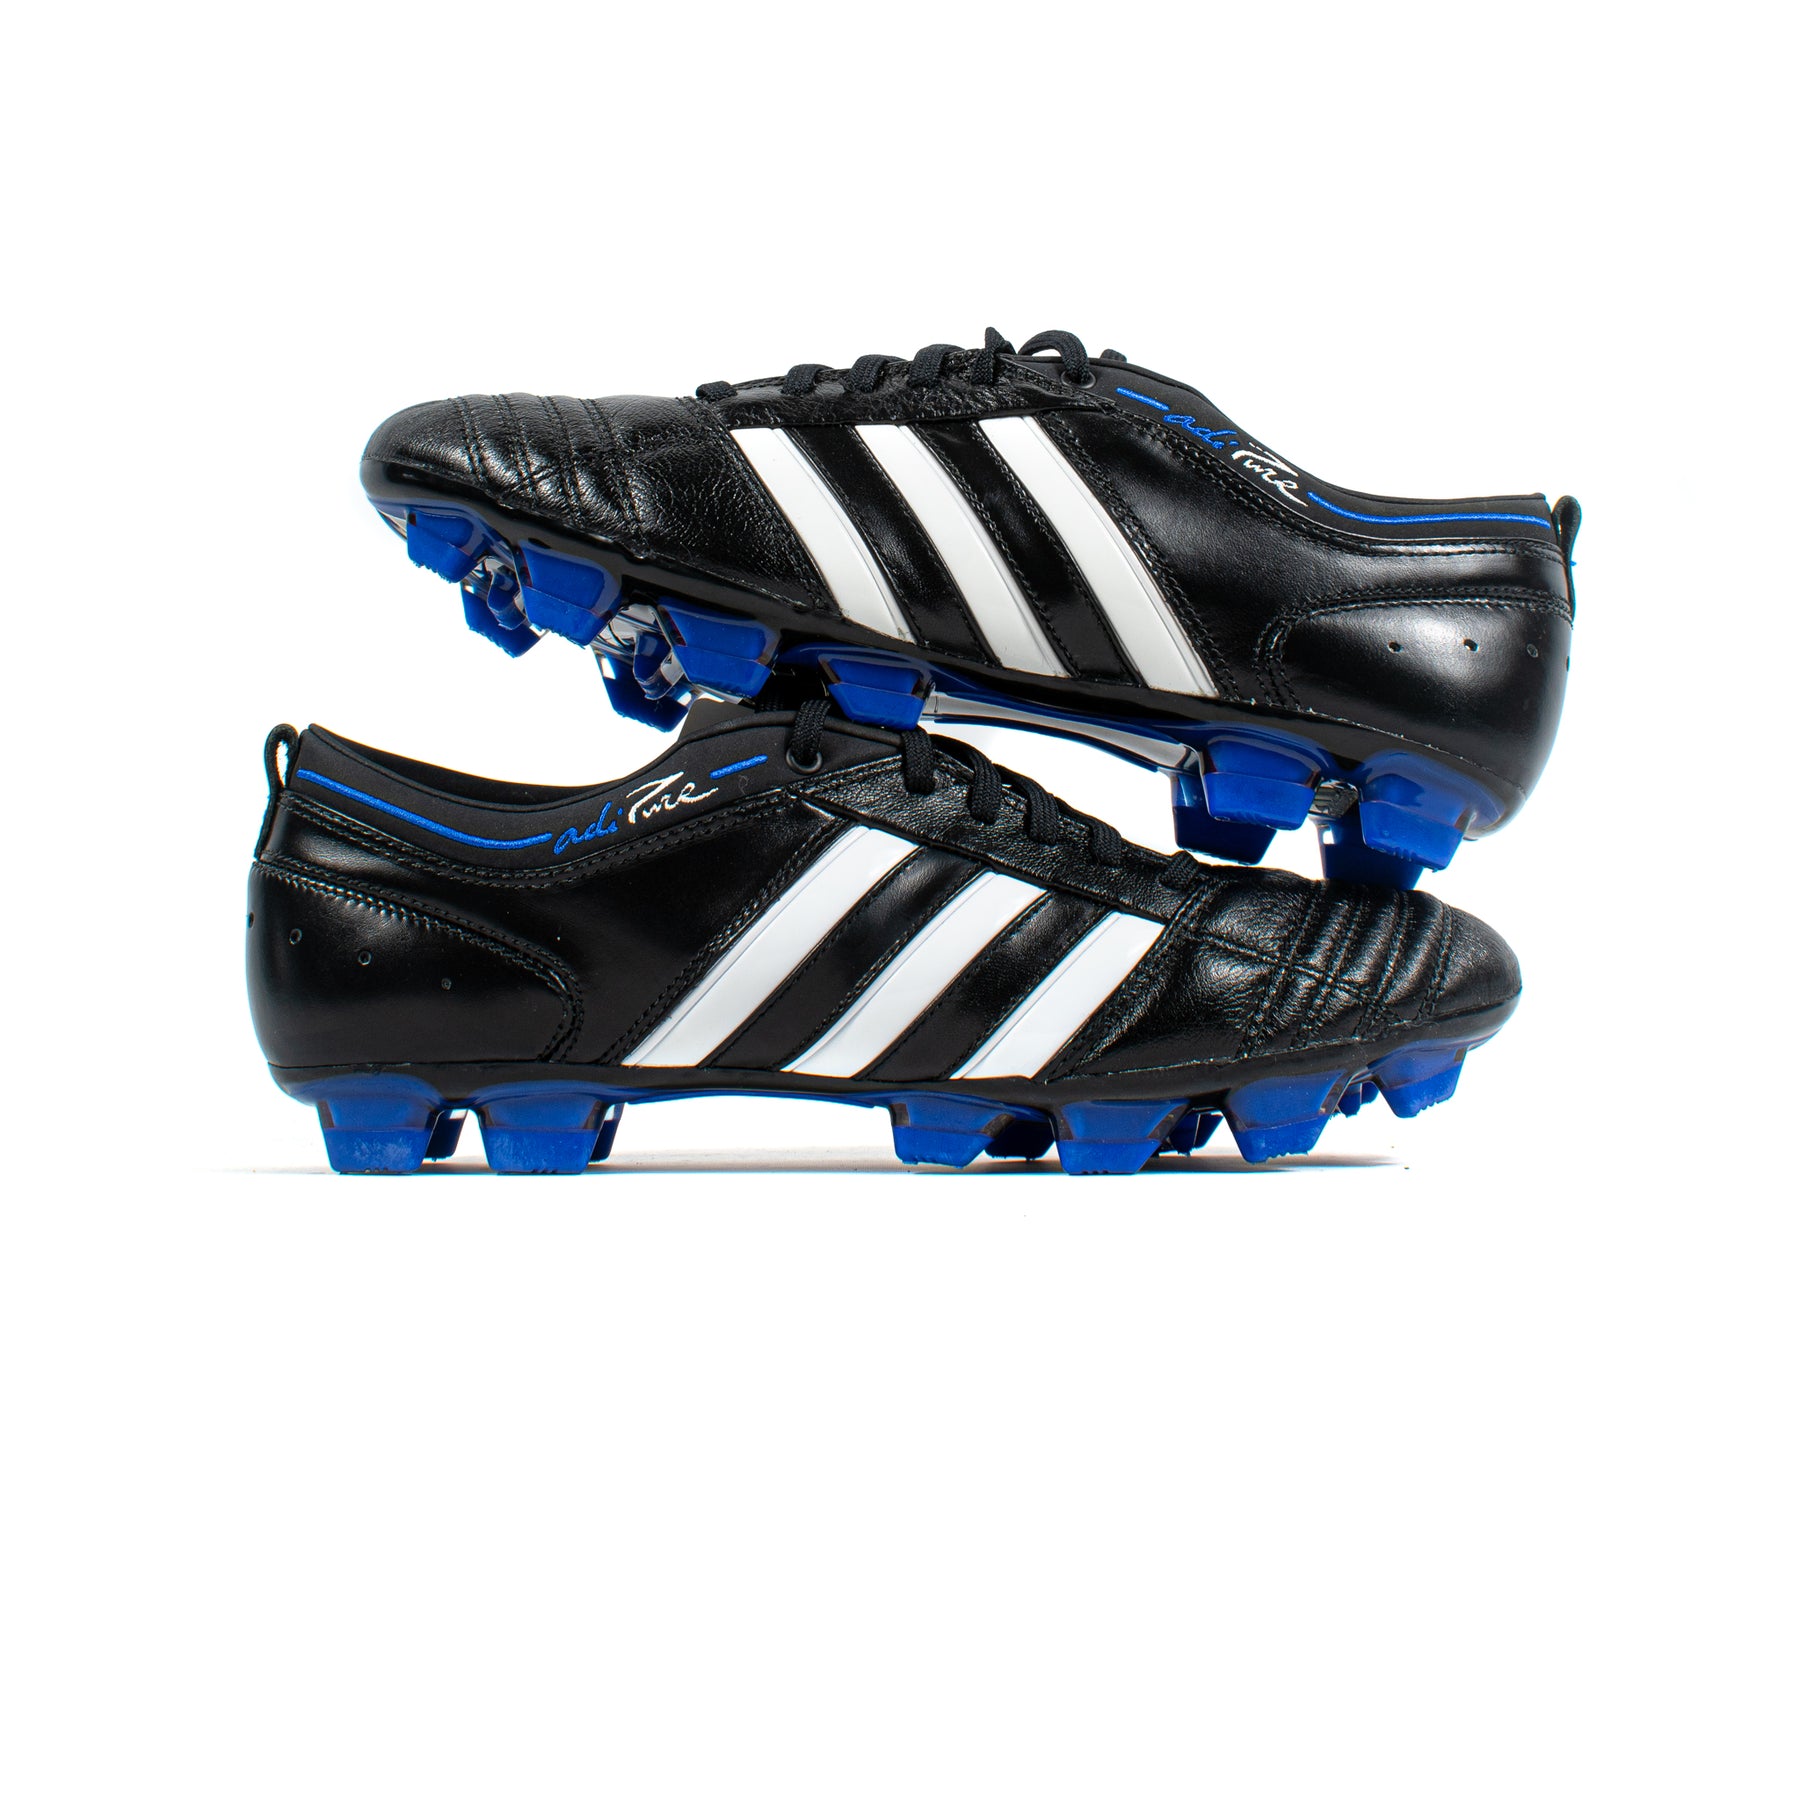 Célula somatica Conciso estoy de acuerdo Adidas AdiPure II Black Blue FG – Classic Soccer Cleats